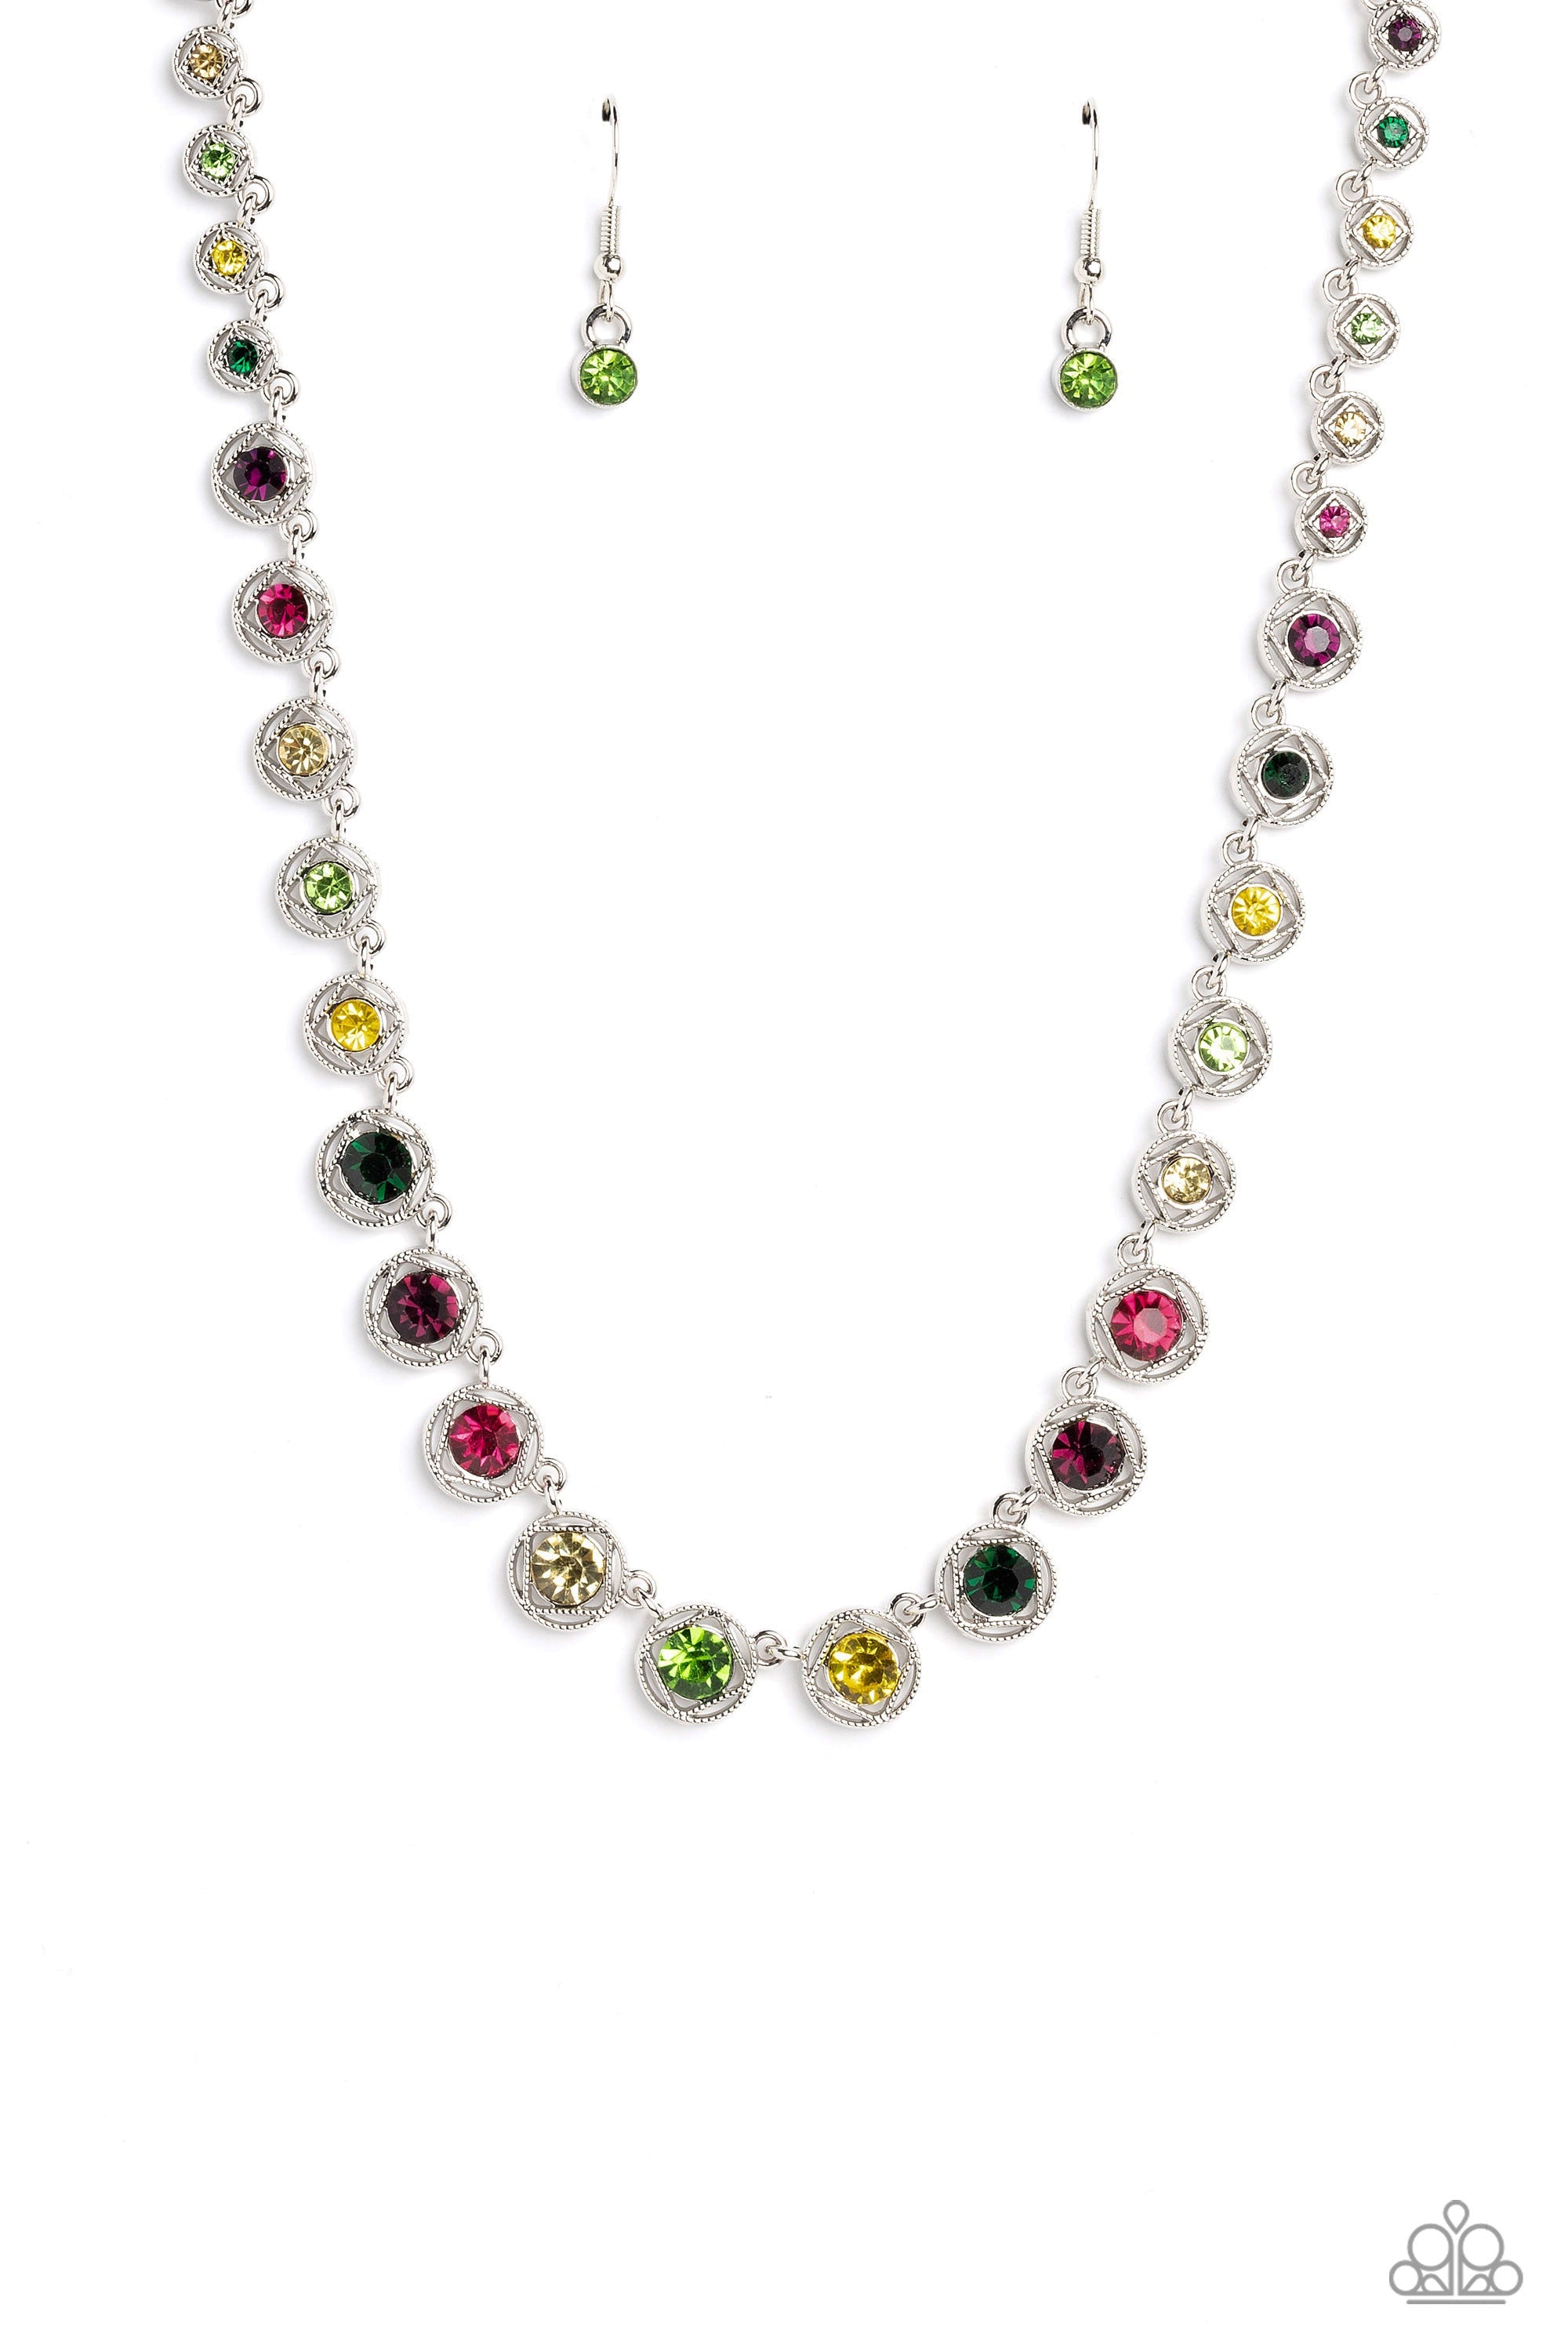 Kaleidoscope Charm Multi Rhinestone Necklace - Paparazzi Accessories- lightbox - CarasShop.com - $5 Jewelry by Cara Jewels